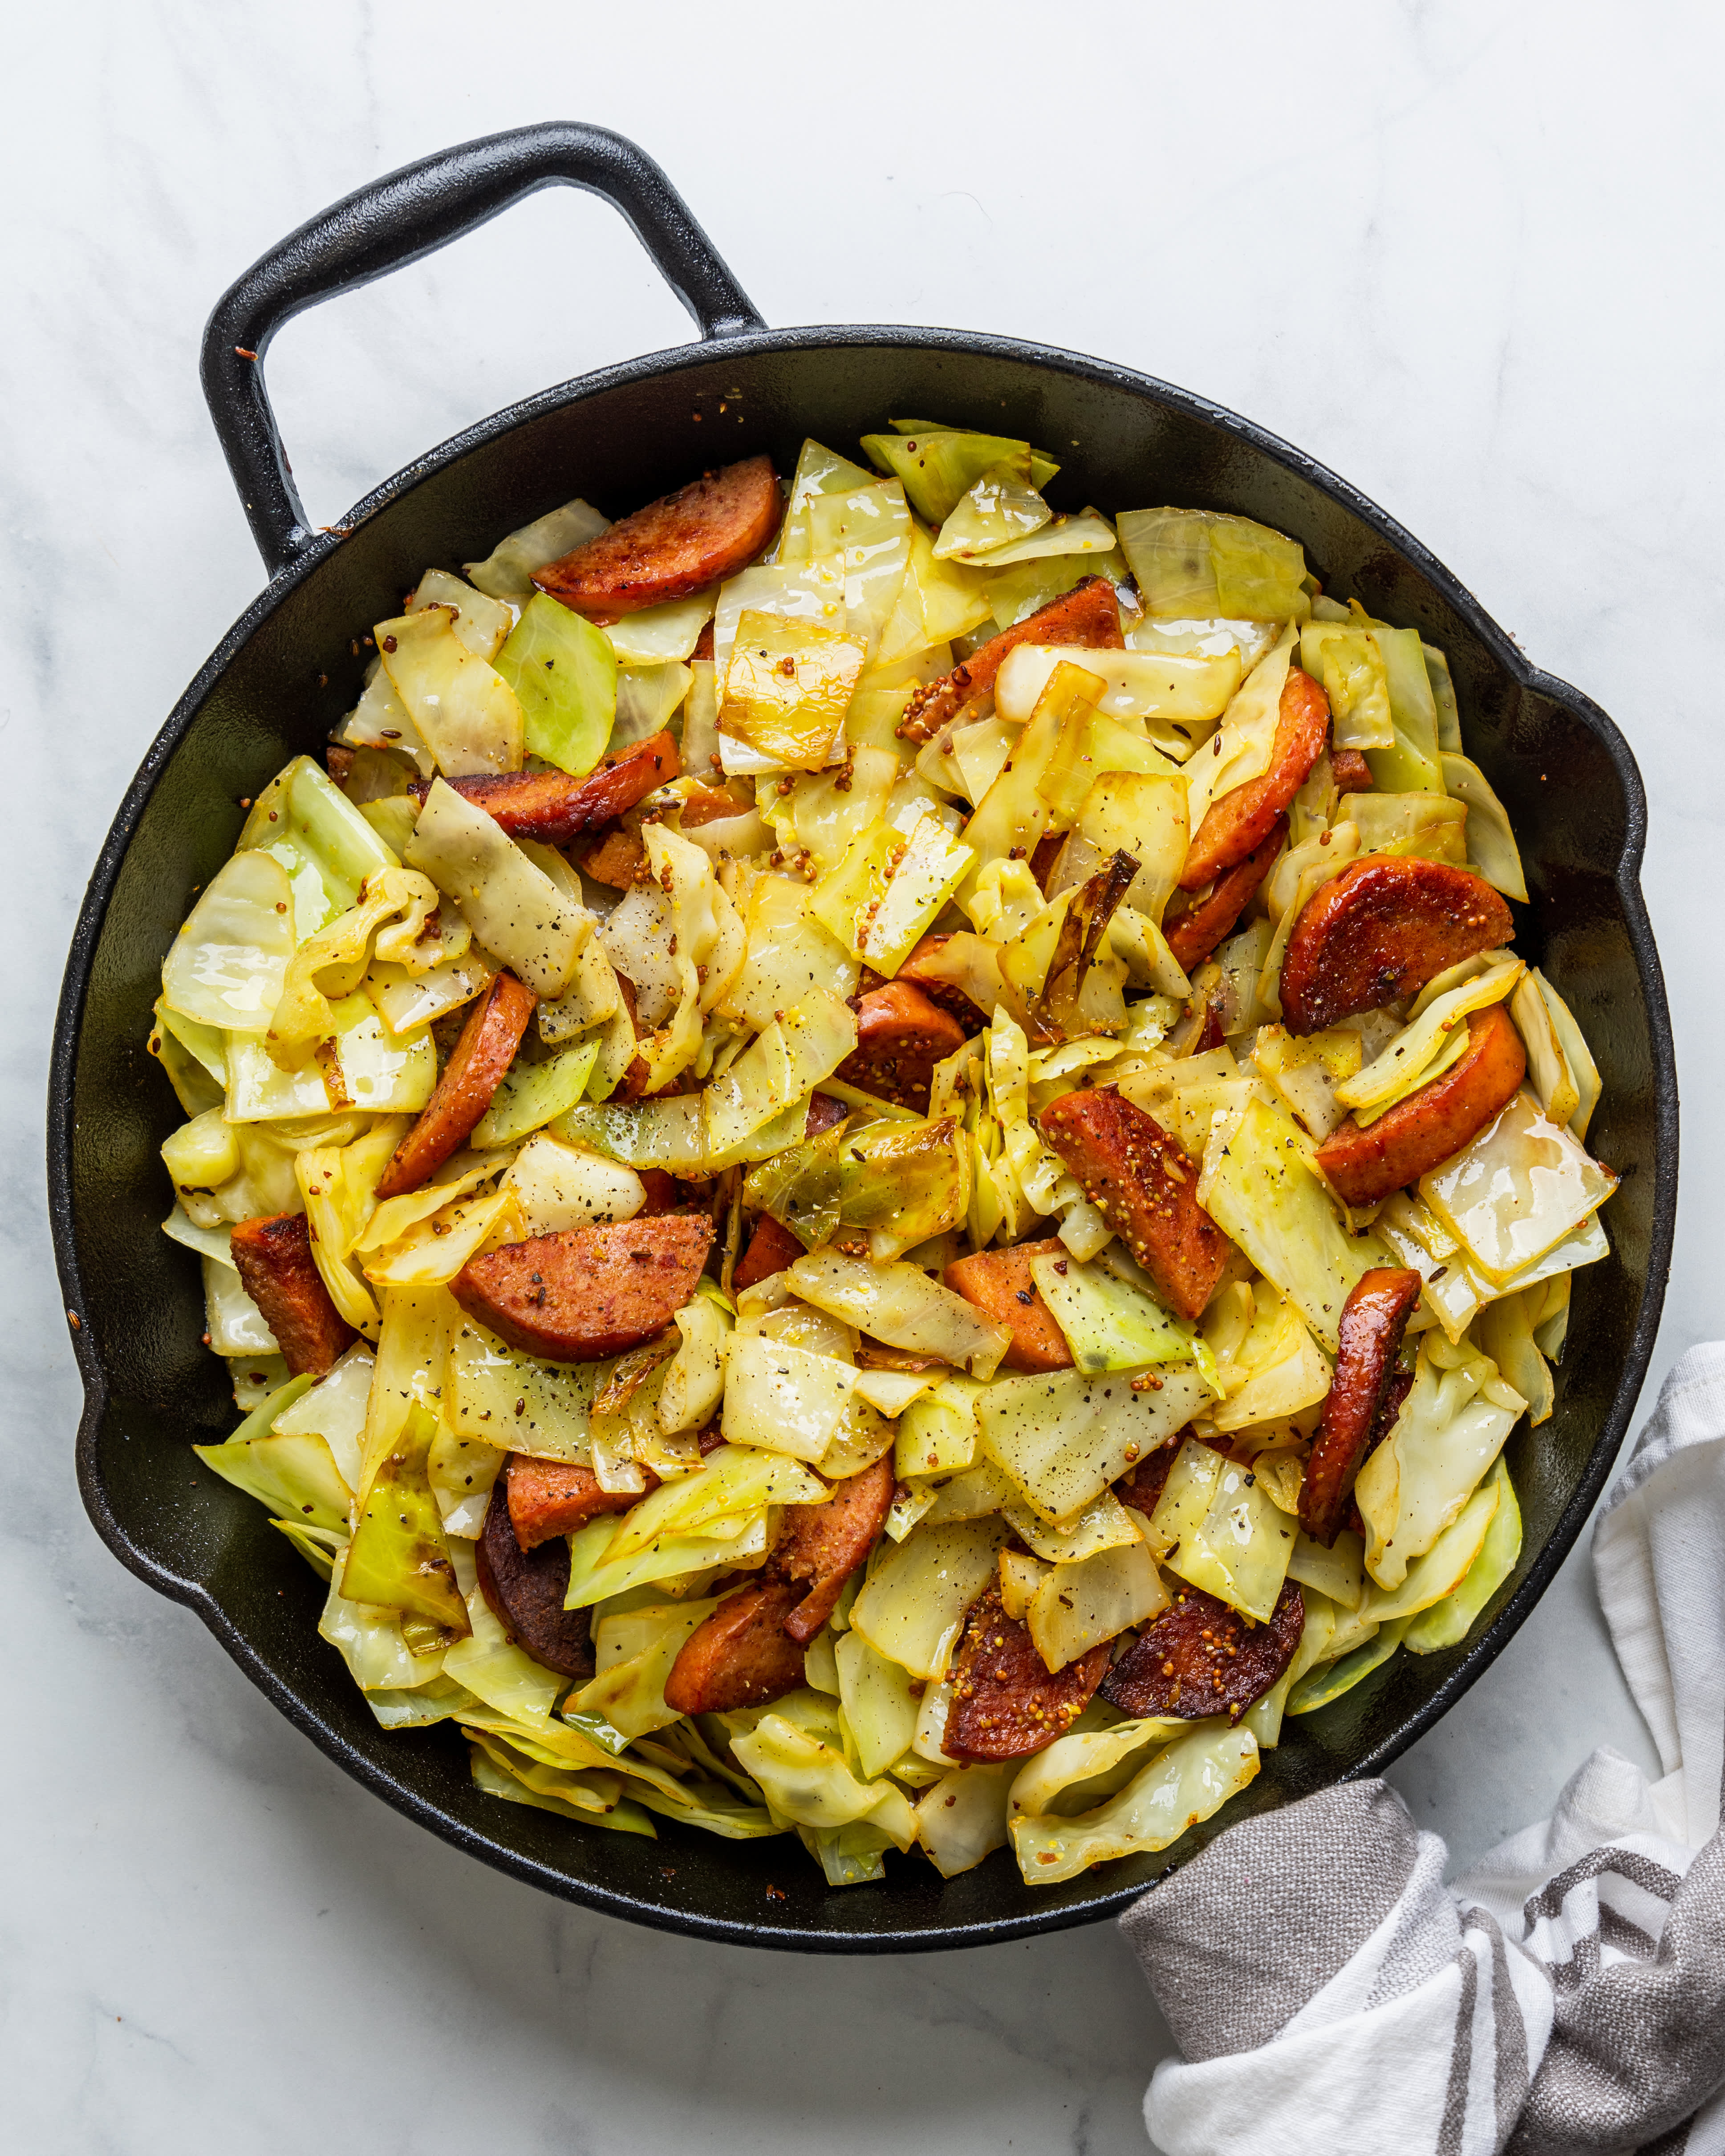 30 Minute Kielbasa And Cabbage Skillet Recipe Kitchn,Steaming Broccoli And Cauliflower